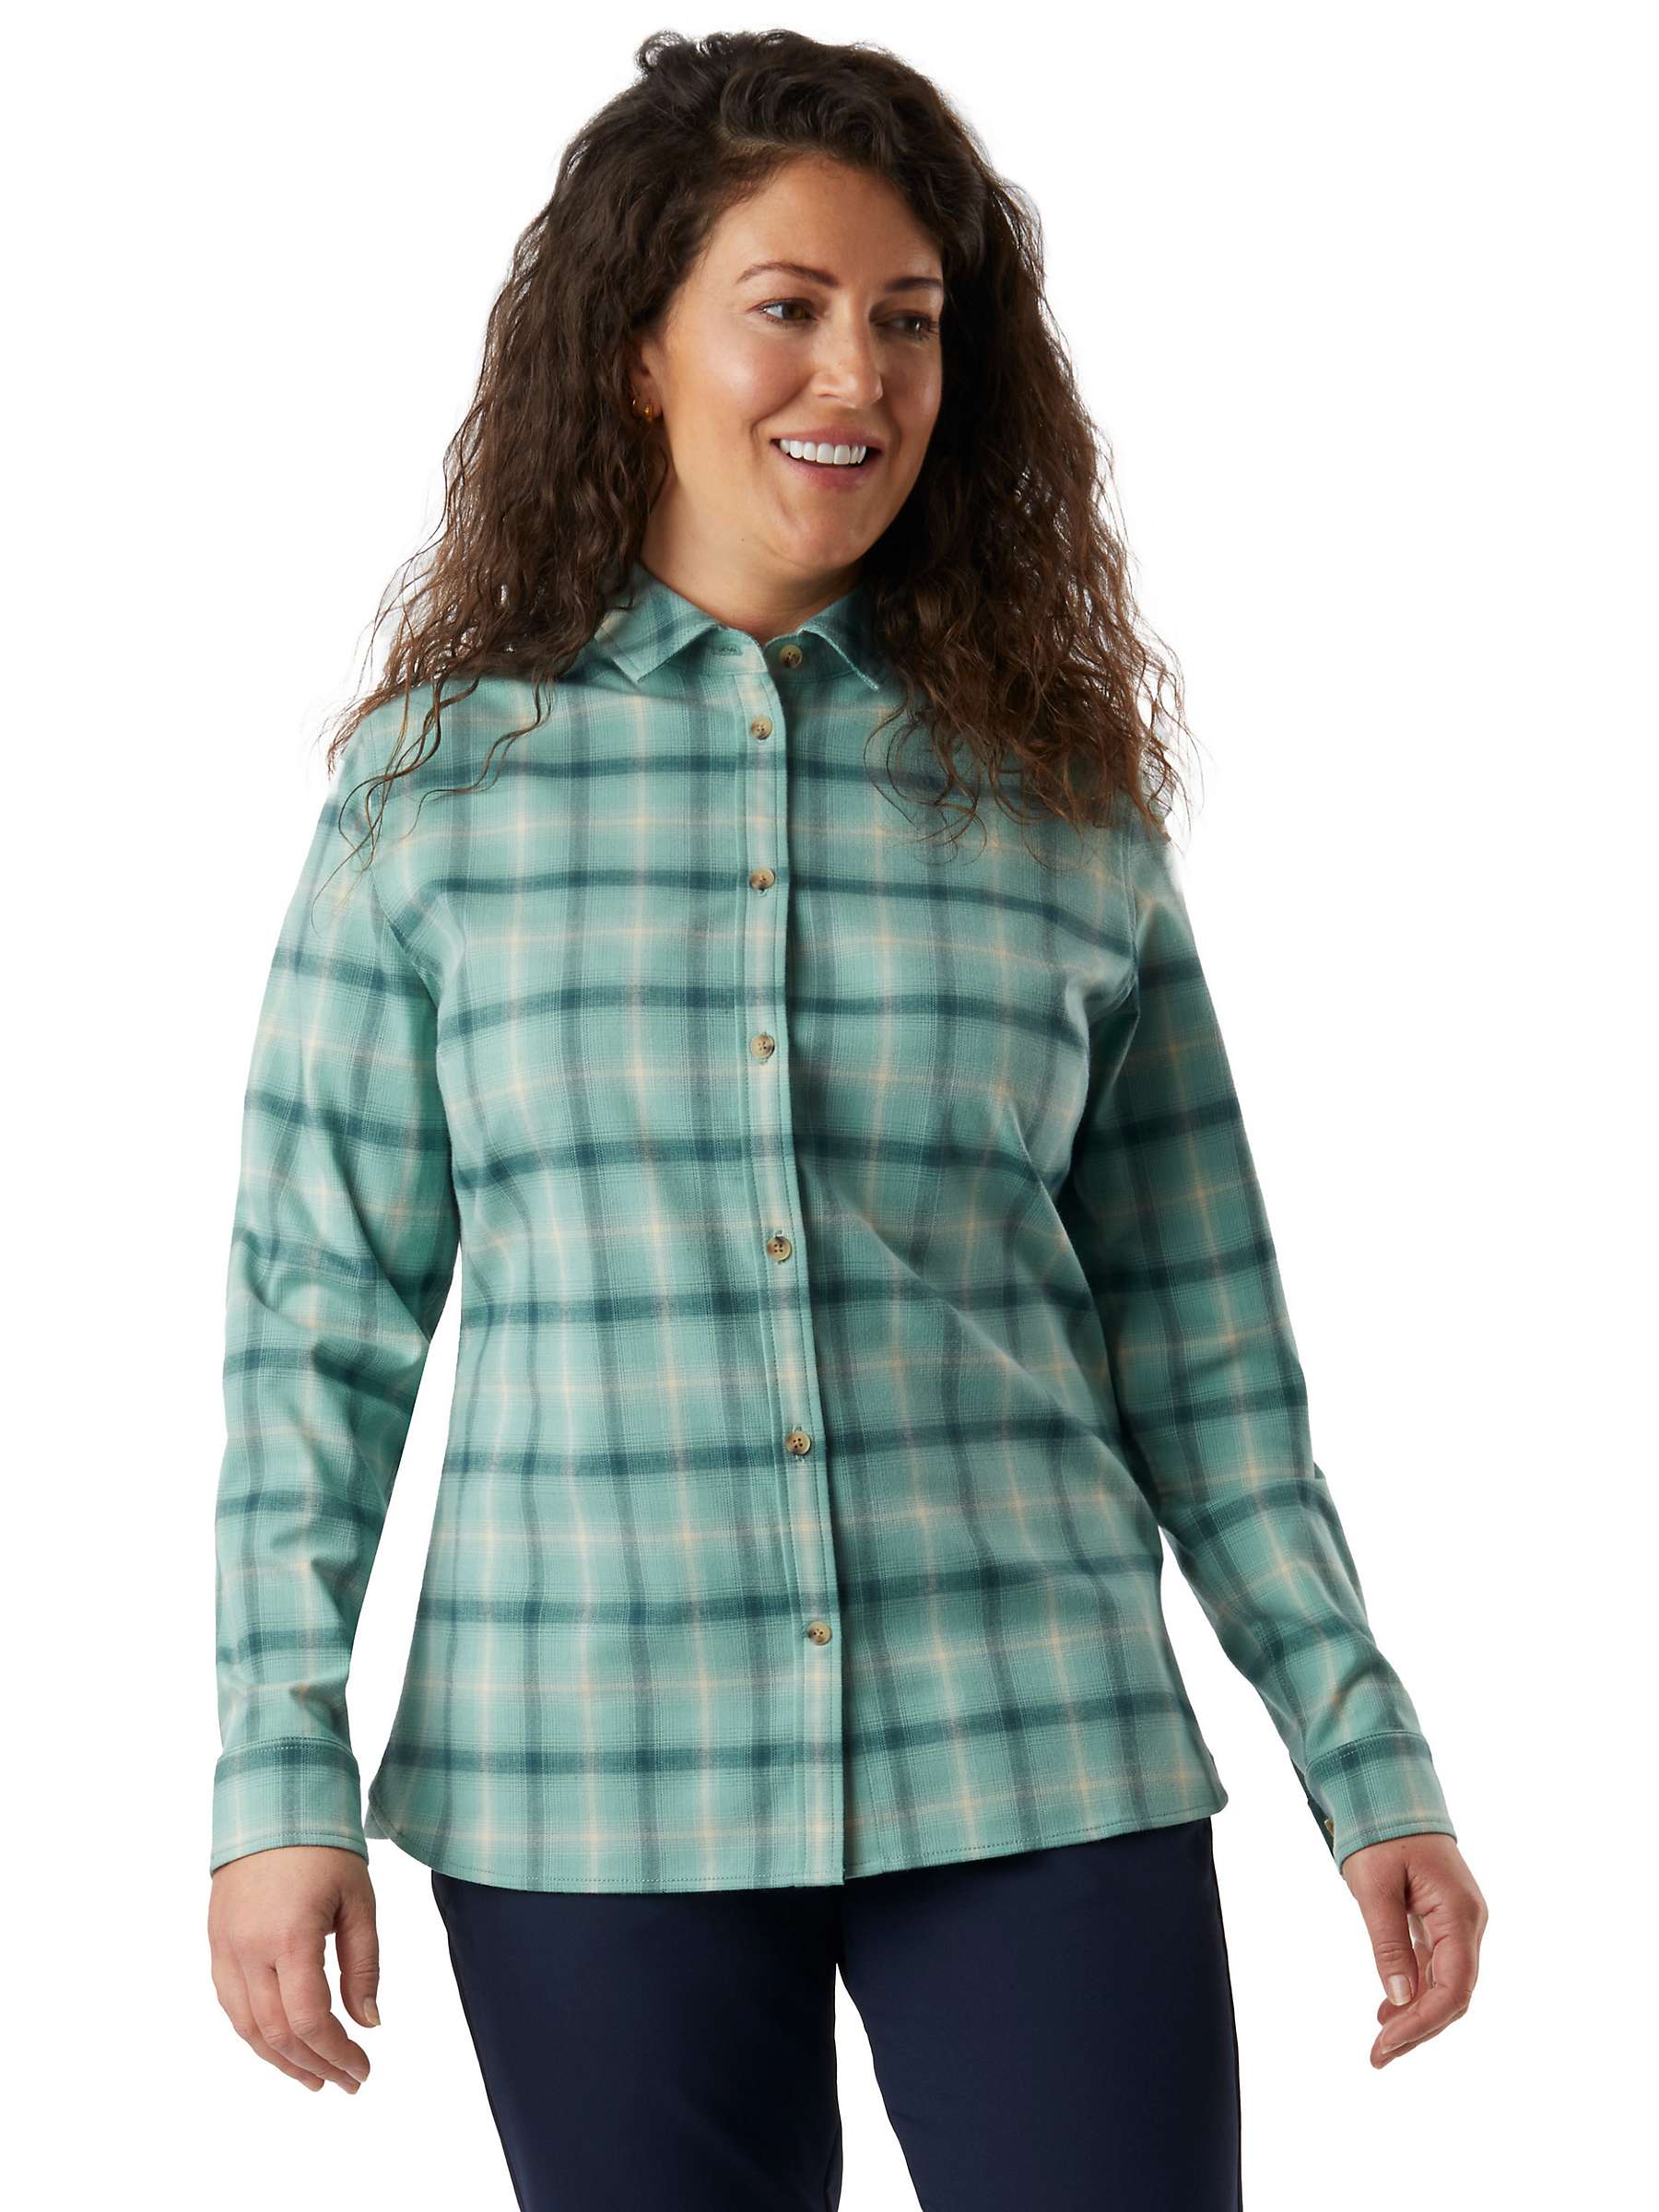 Buy Rohan Women's Cove Check Long Sleeve Shirt Online at johnlewis.com